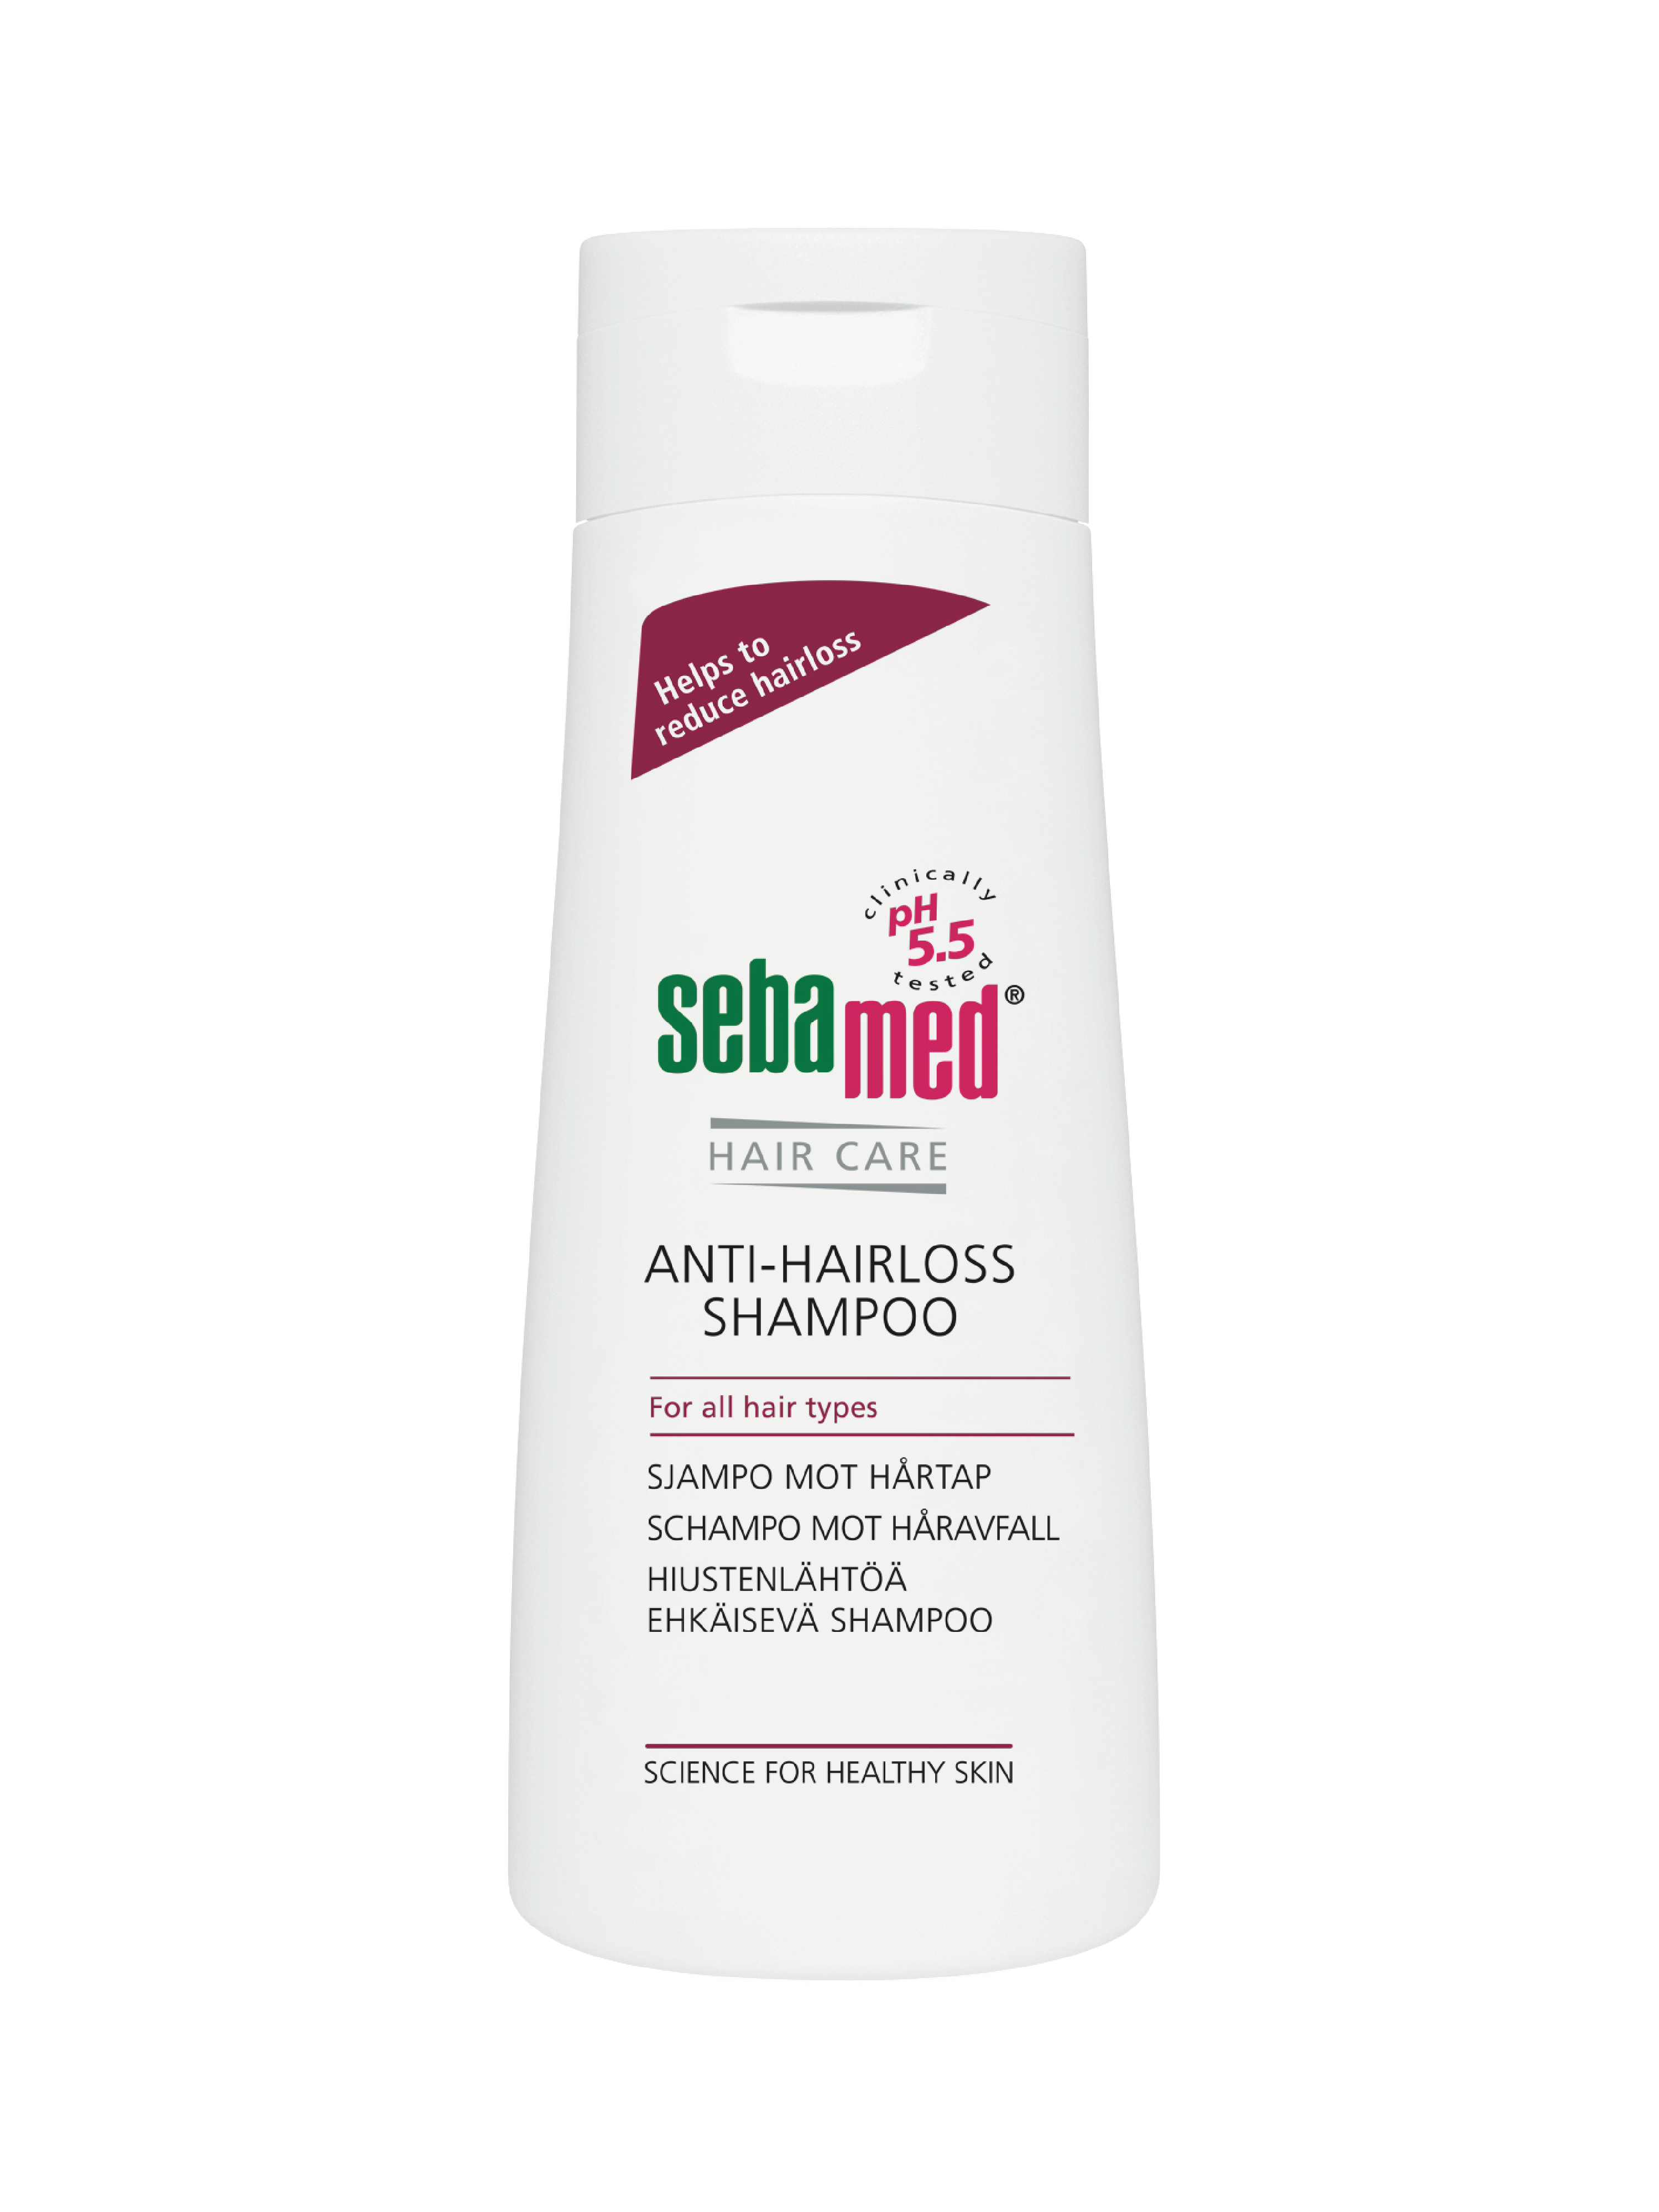 SebaMed Anti-Hairloss Shampoo, 200 ml